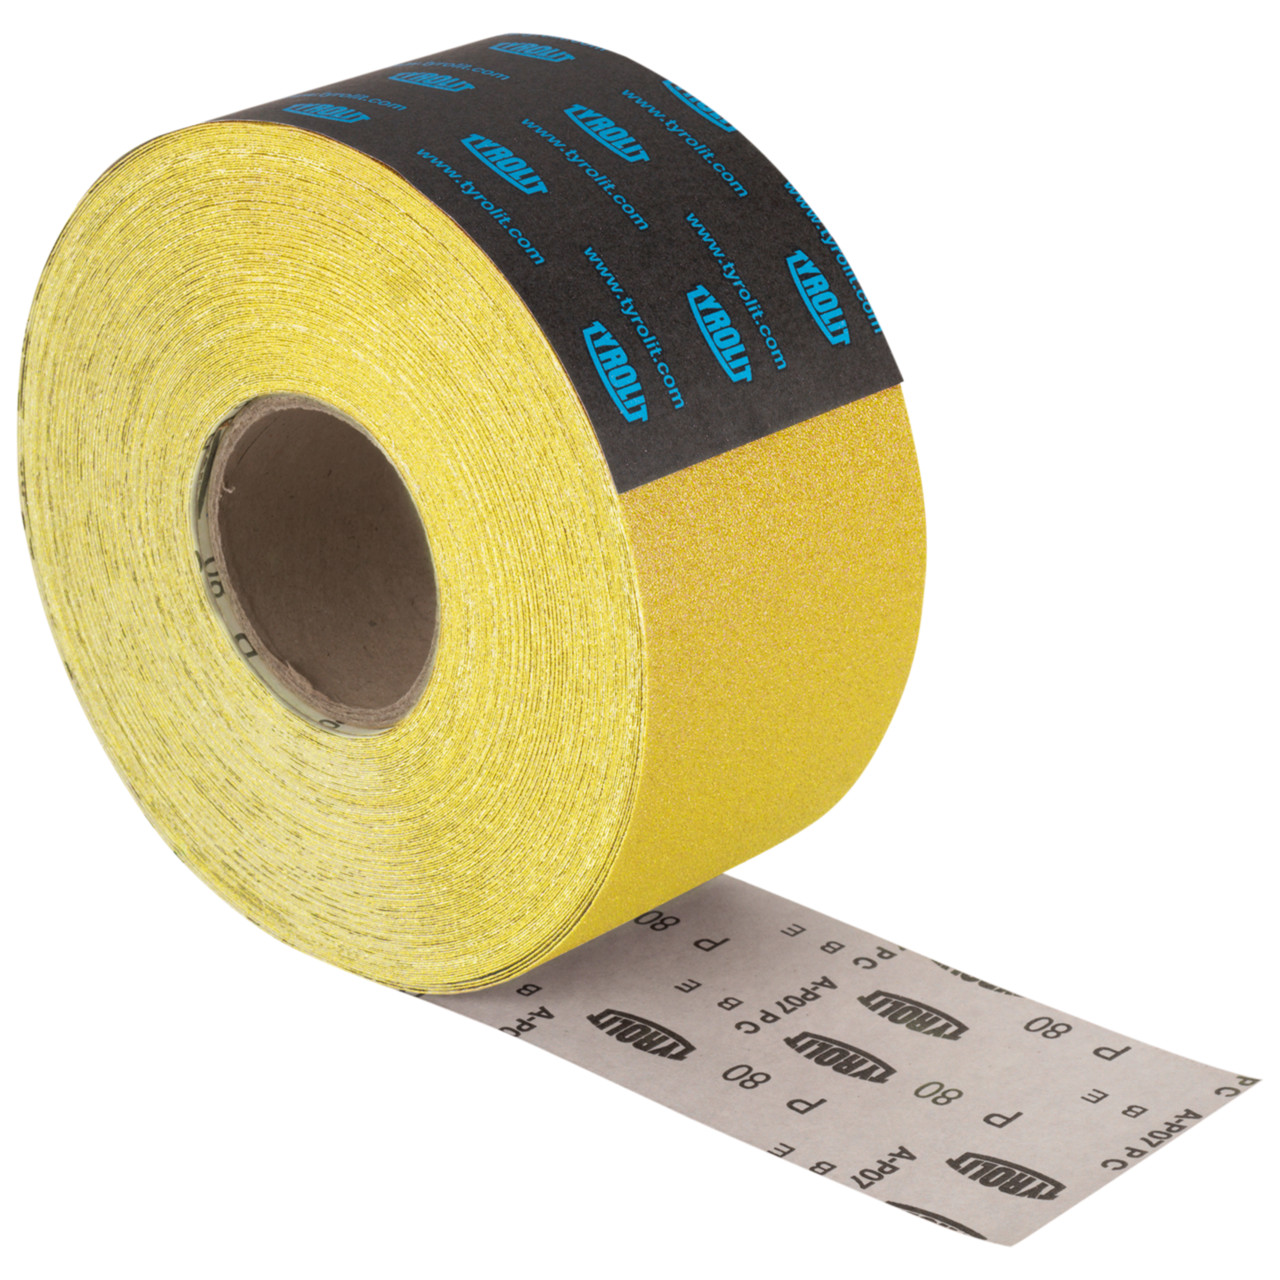 TYROLIT A-P21 D Paper rolls TxH 115x5 For plastic, wood, paint and varnish, P40, shape: ROLL, Art. 34231870